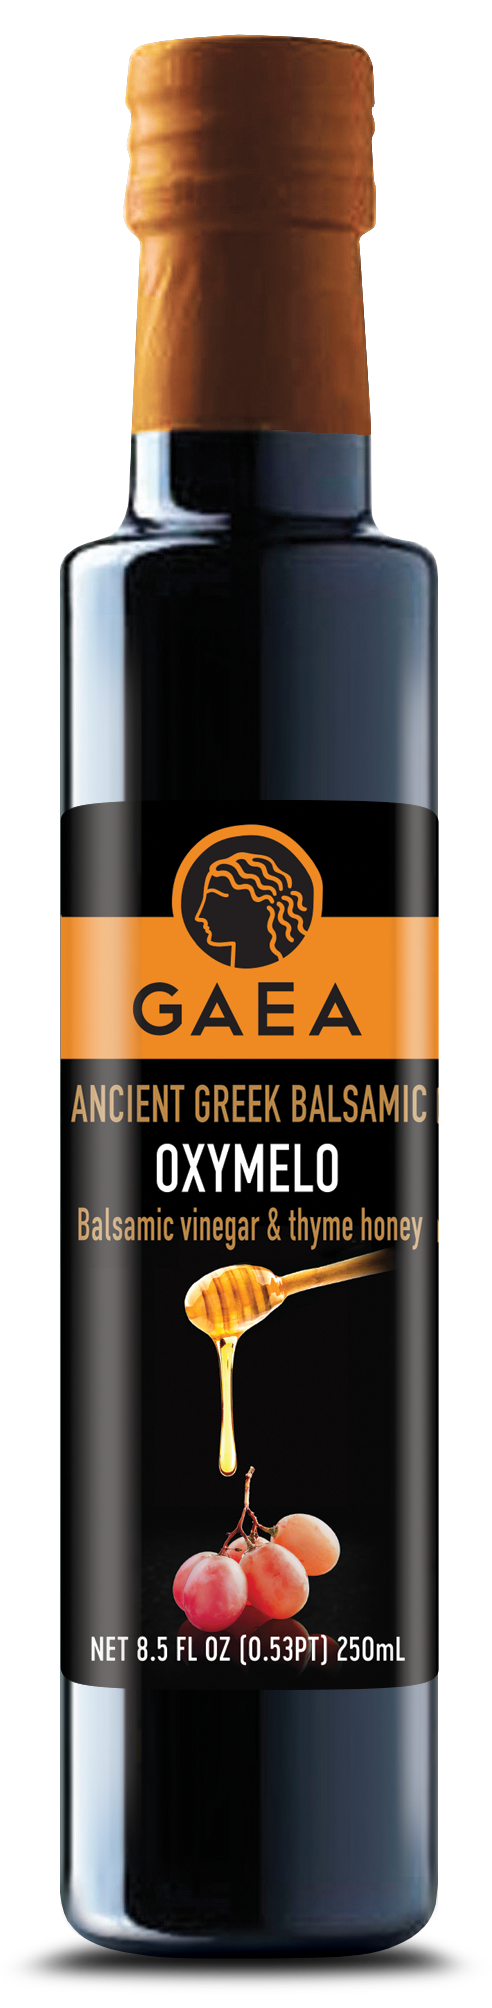 GAEA Ancient Greek balsamic vinegar